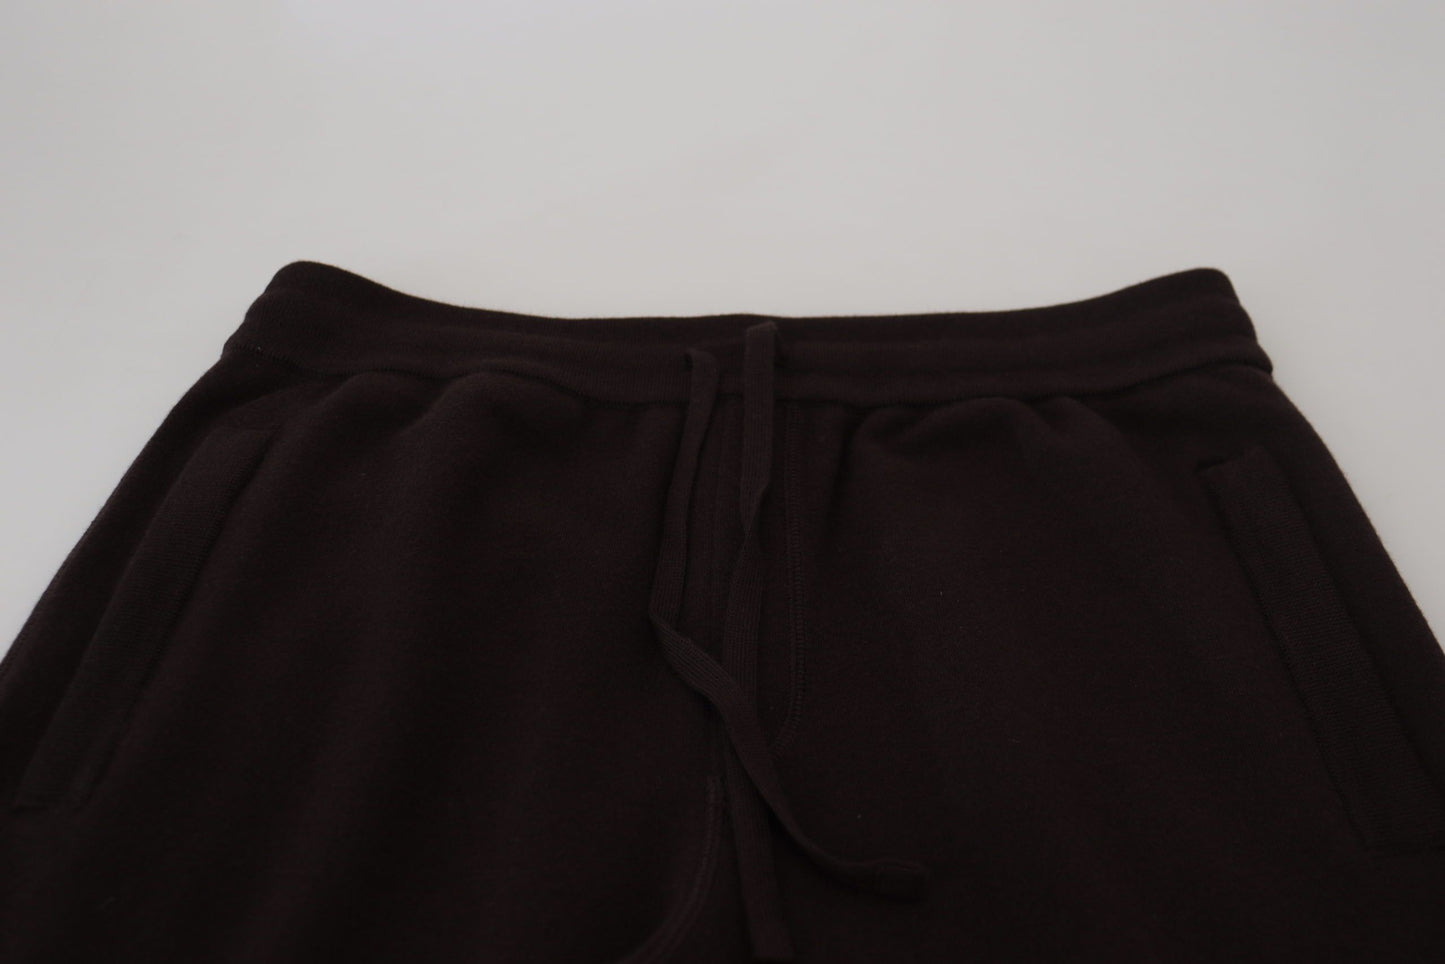 Dolce & Gabbana Brown Cashmere Trousers Bottoms Drawstring Pants